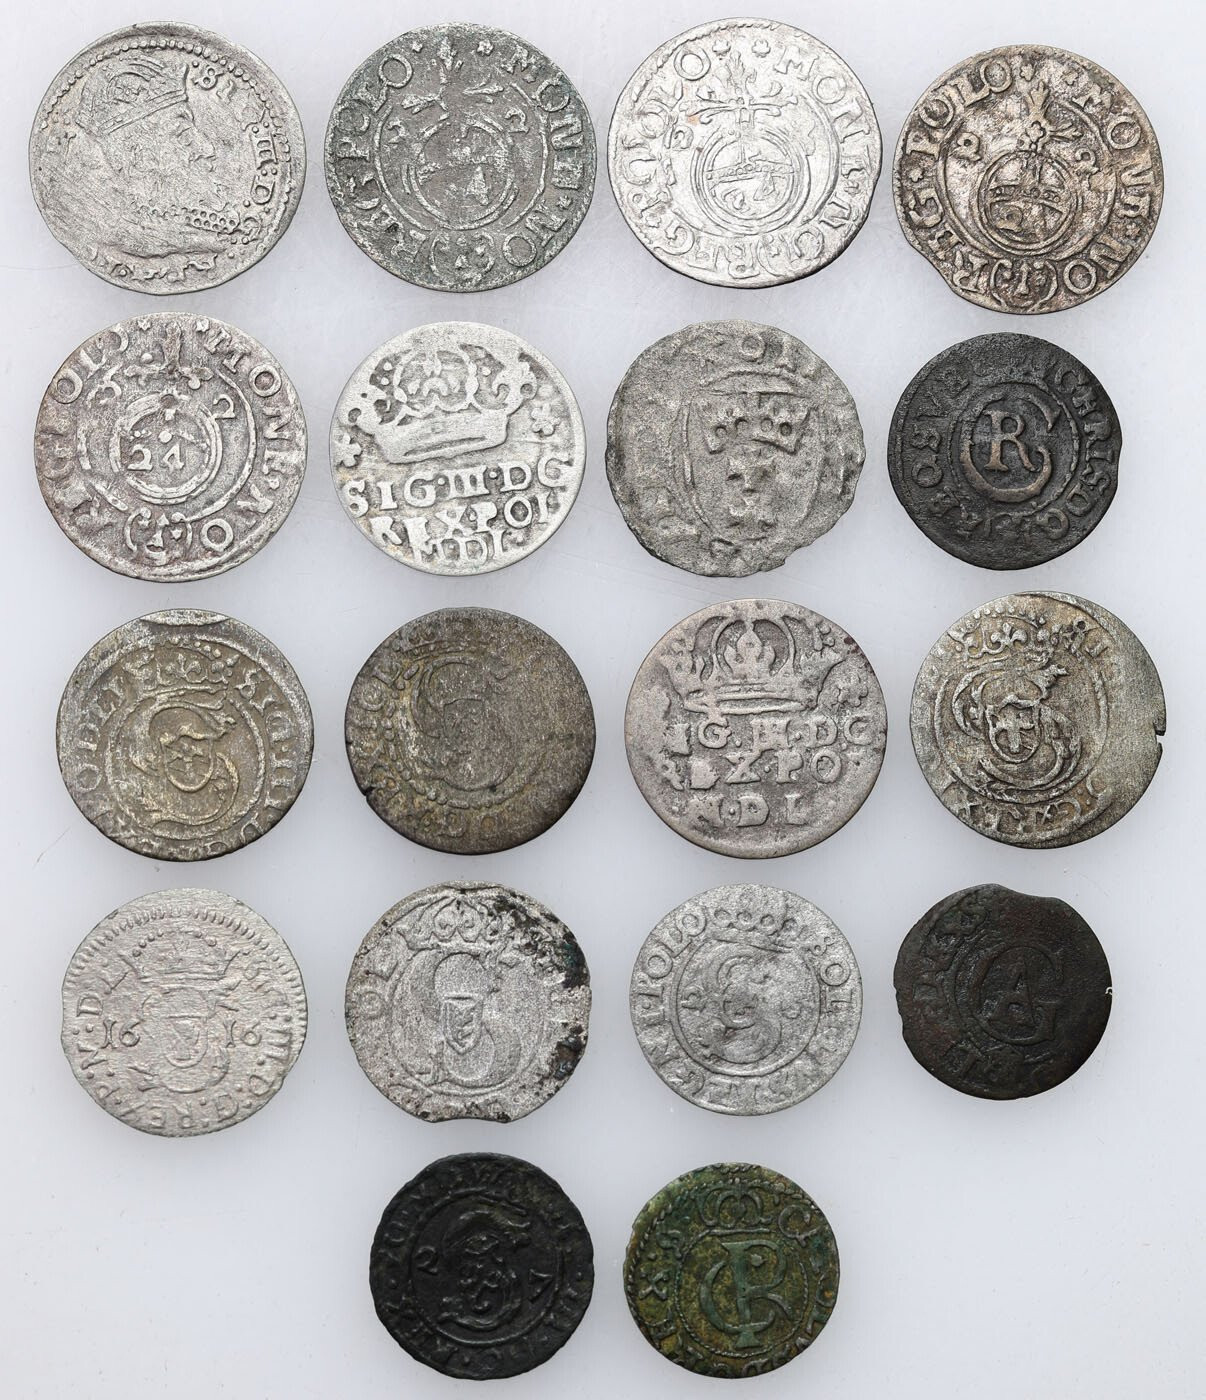 Polska XV – XVII wiek. Grosz, szeląg, półtorak - zestaw 18 monet